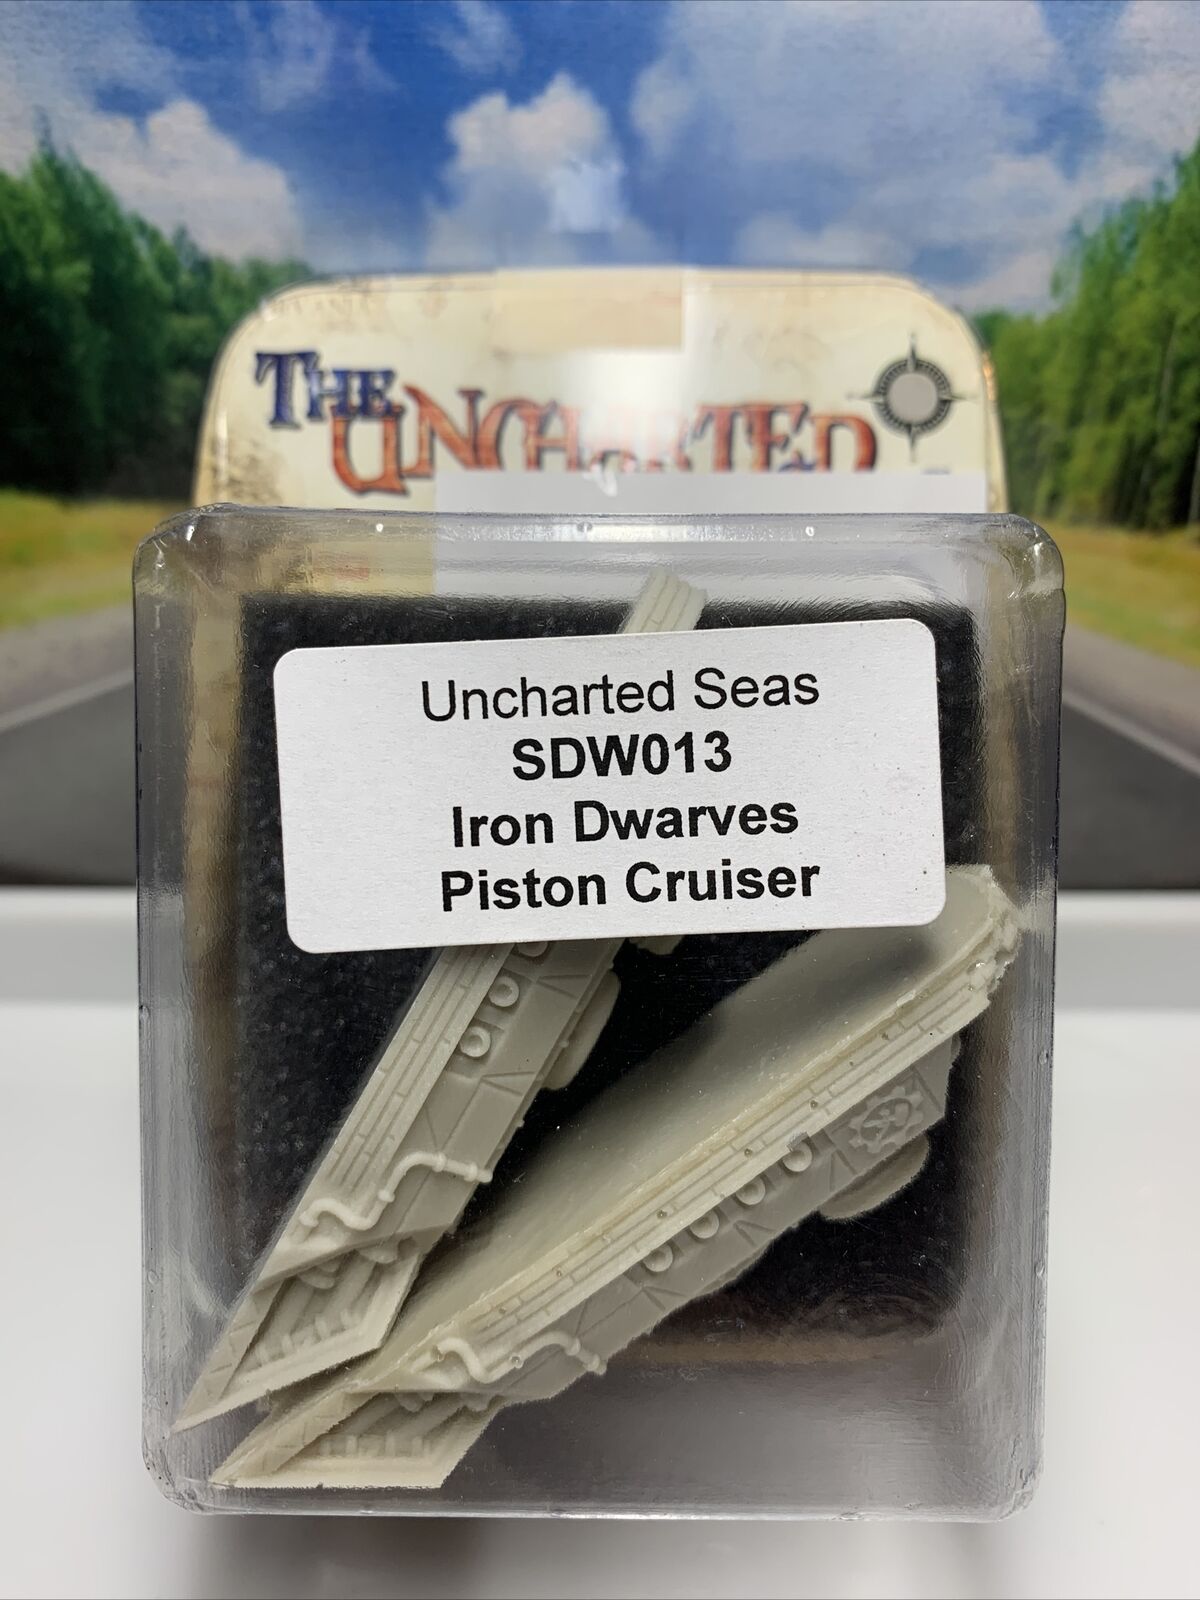 Uncharted Seas SDW013 Iron Dwarves Piston Cruiser